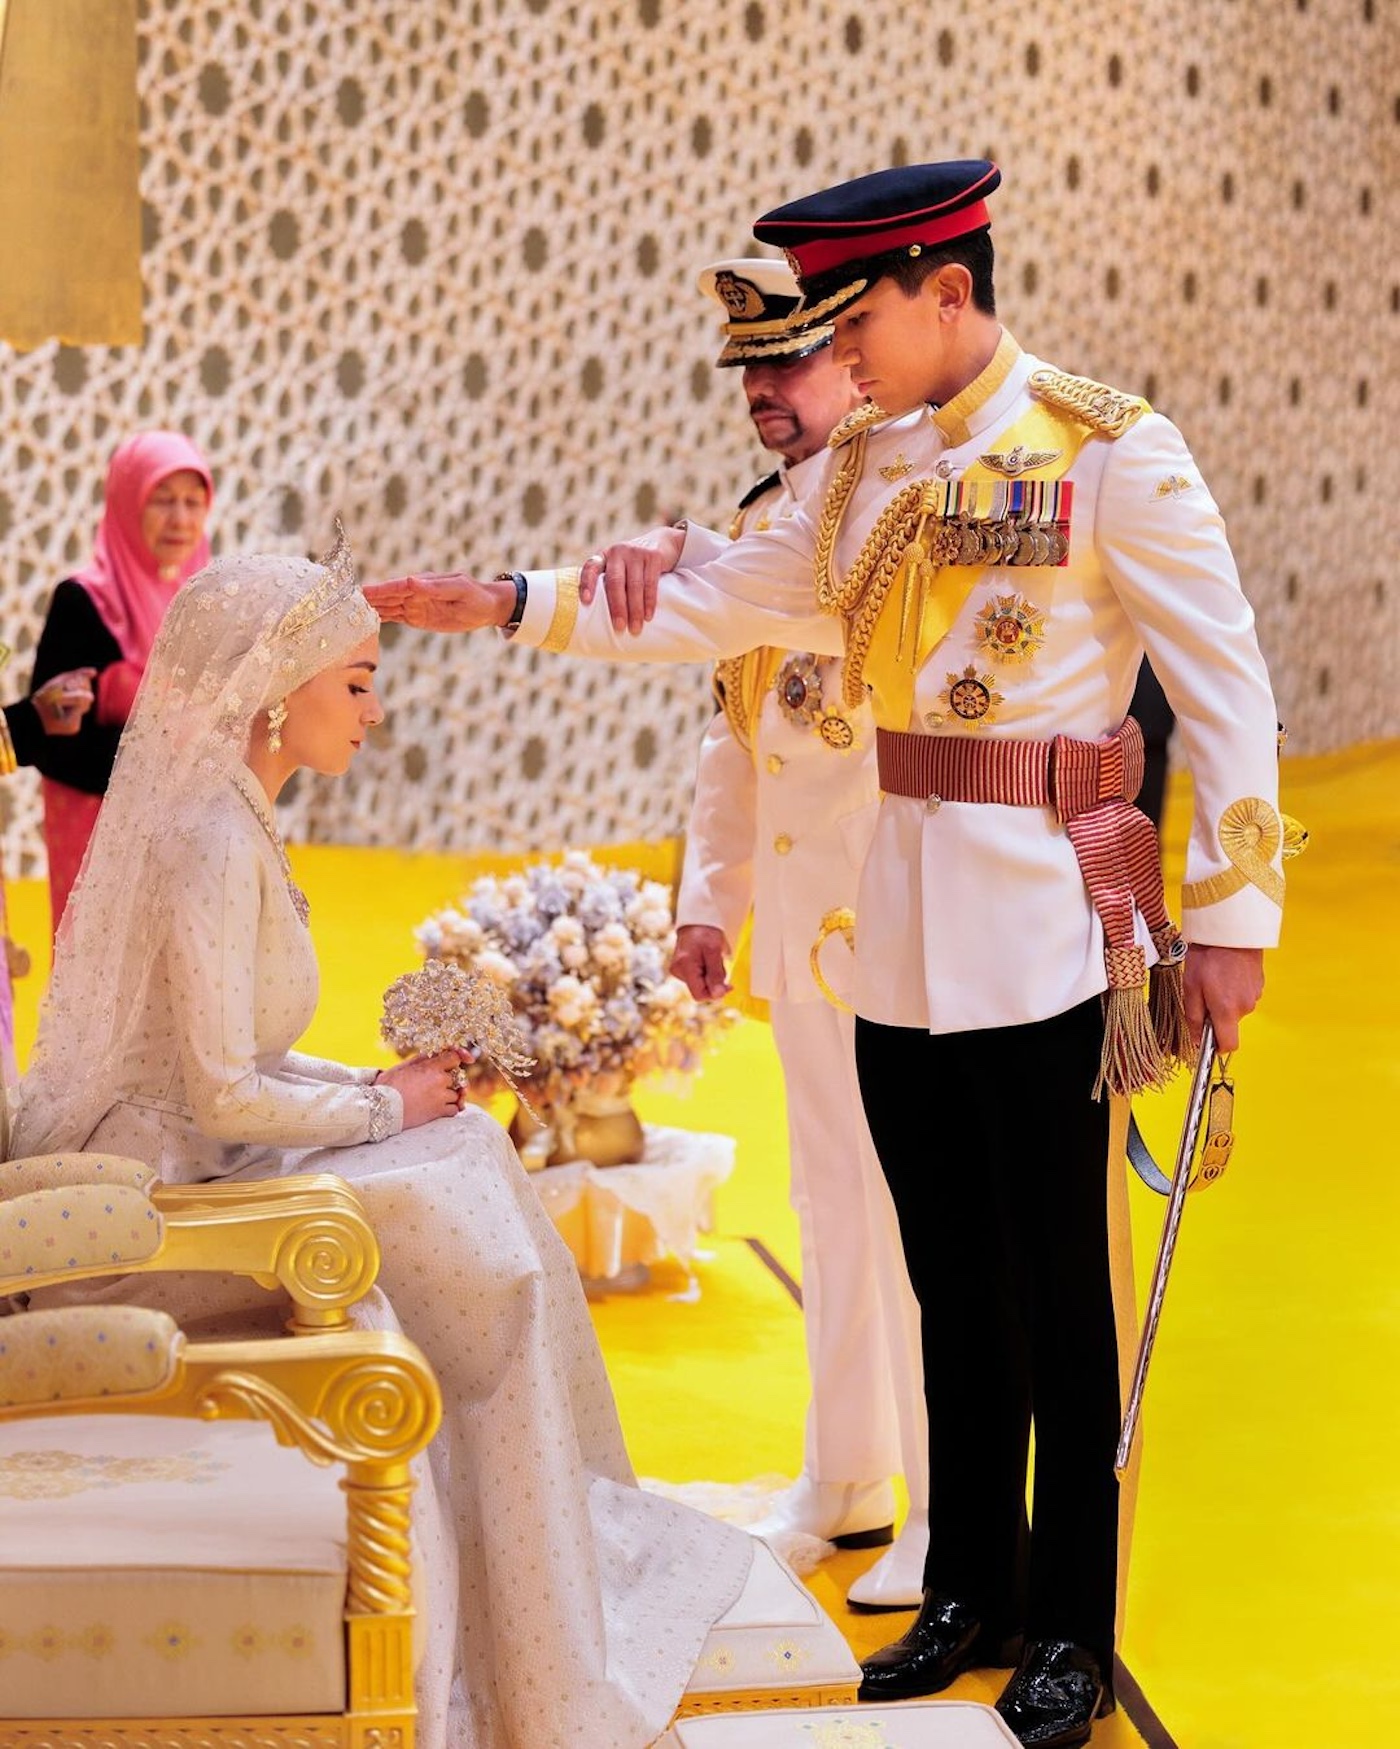 Brunei prince Abdul Mateen Sultan Hassanal Bolkiahmarried